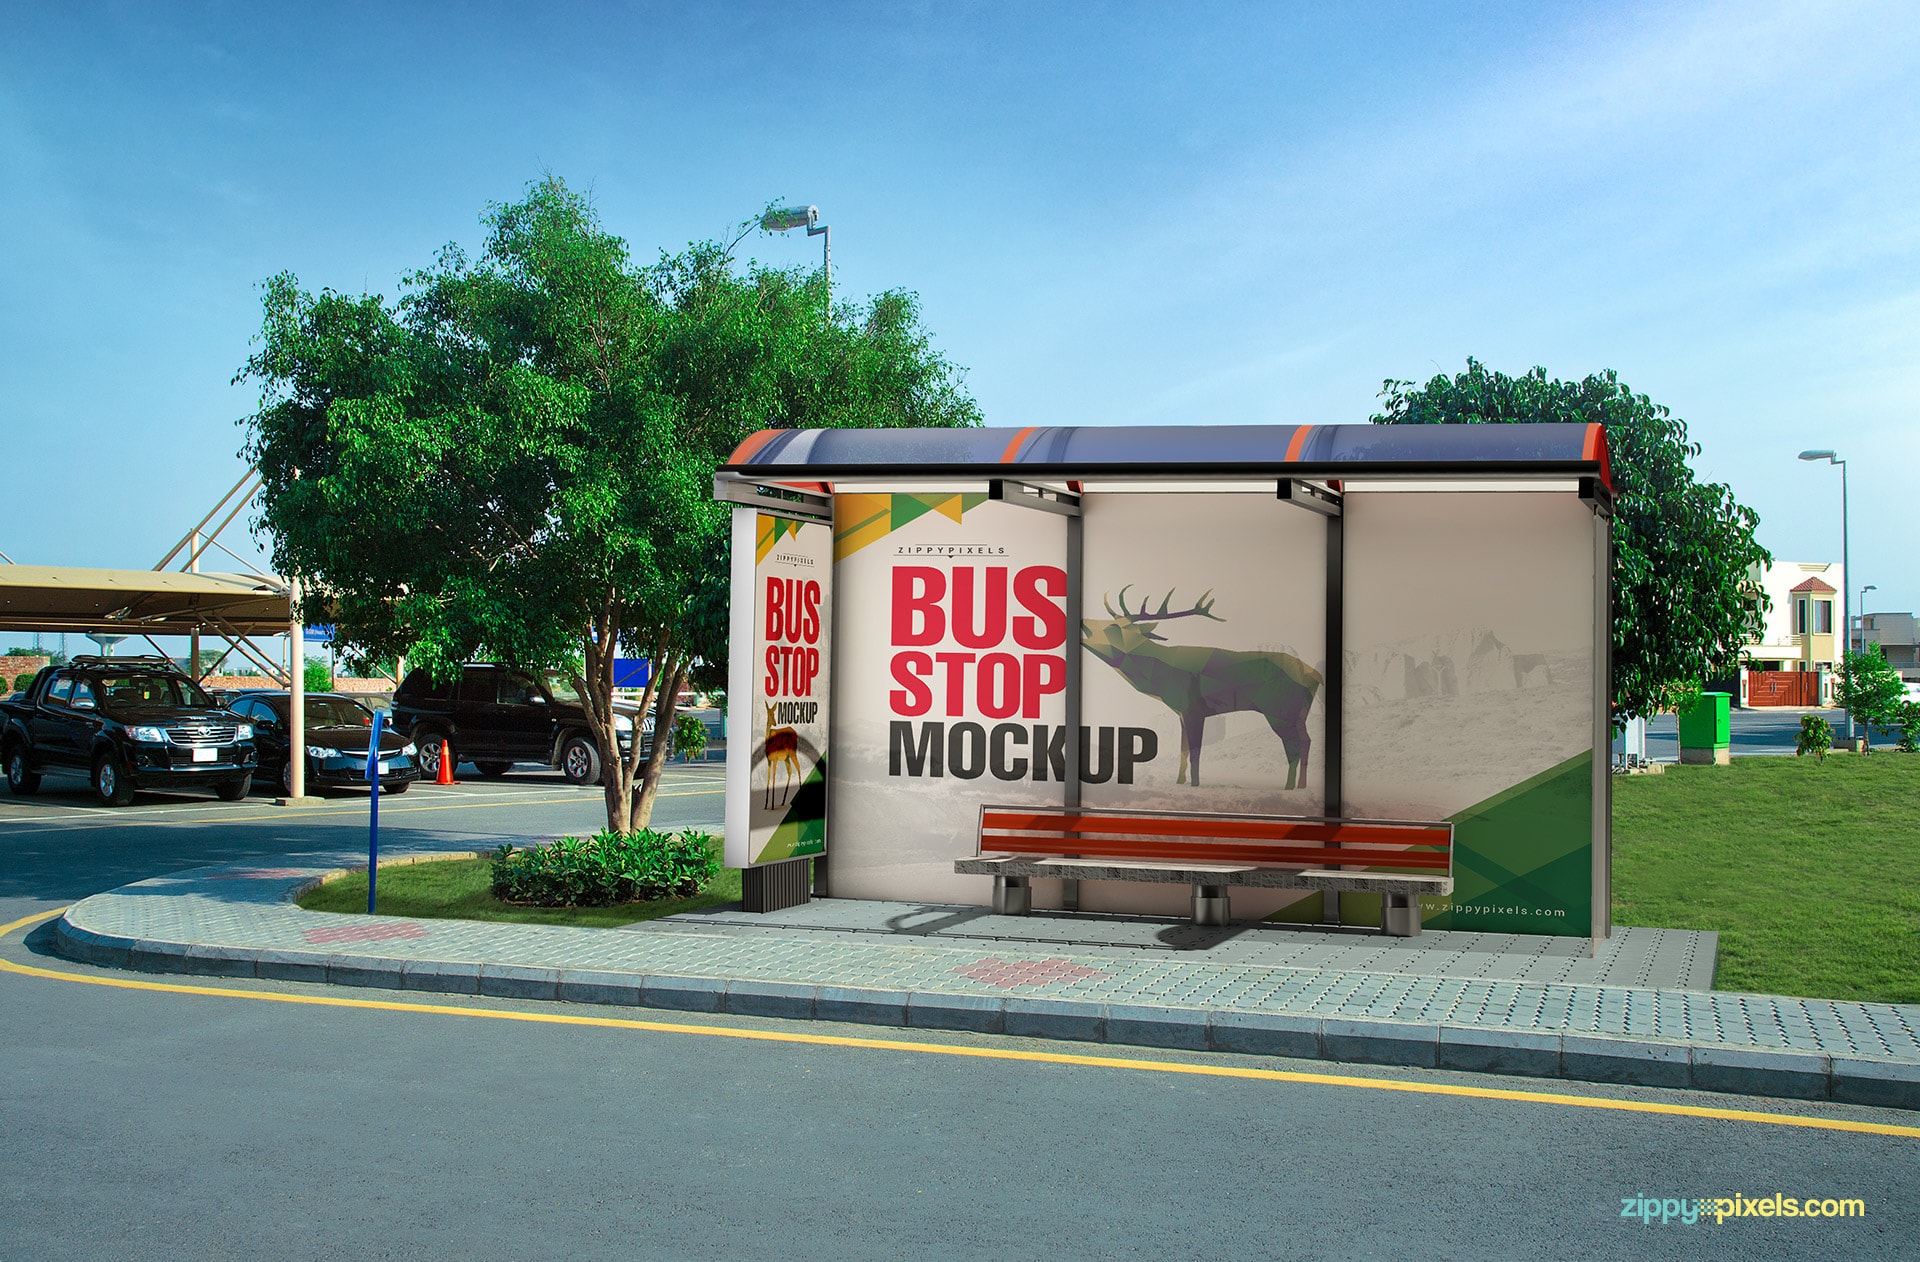 Beautifully created bus shelter mockup